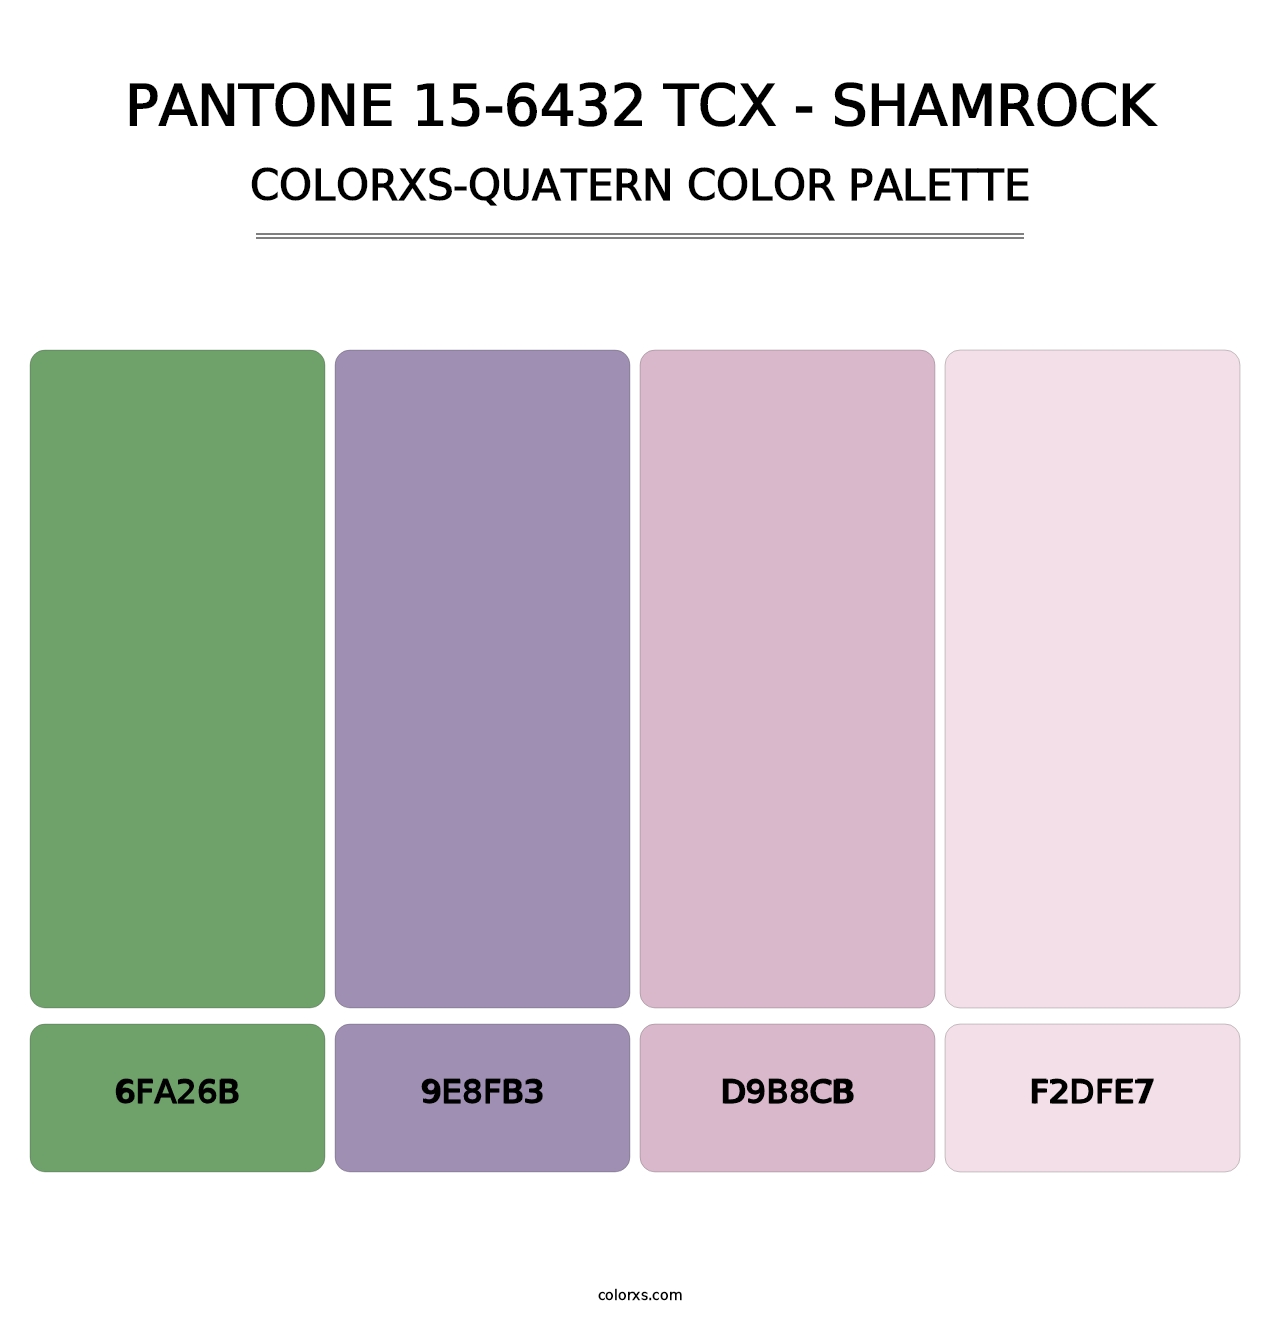 PANTONE 15-6432 TCX - Shamrock - Colorxs Quatern Palette